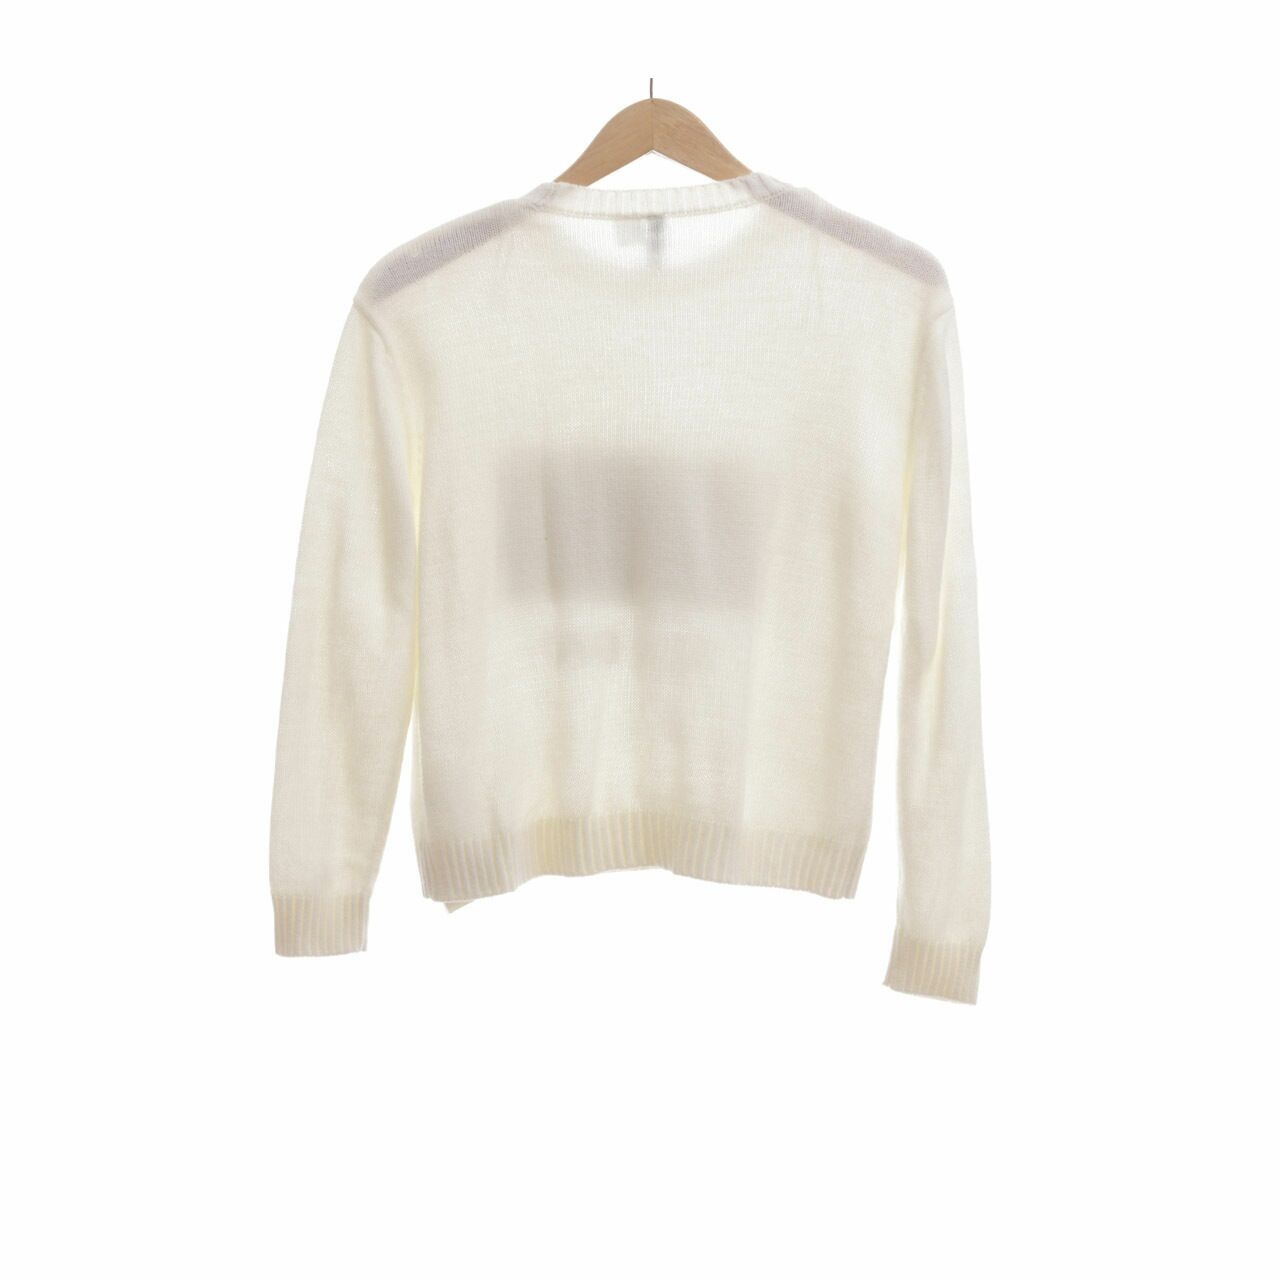 H&M Broken White Sweater